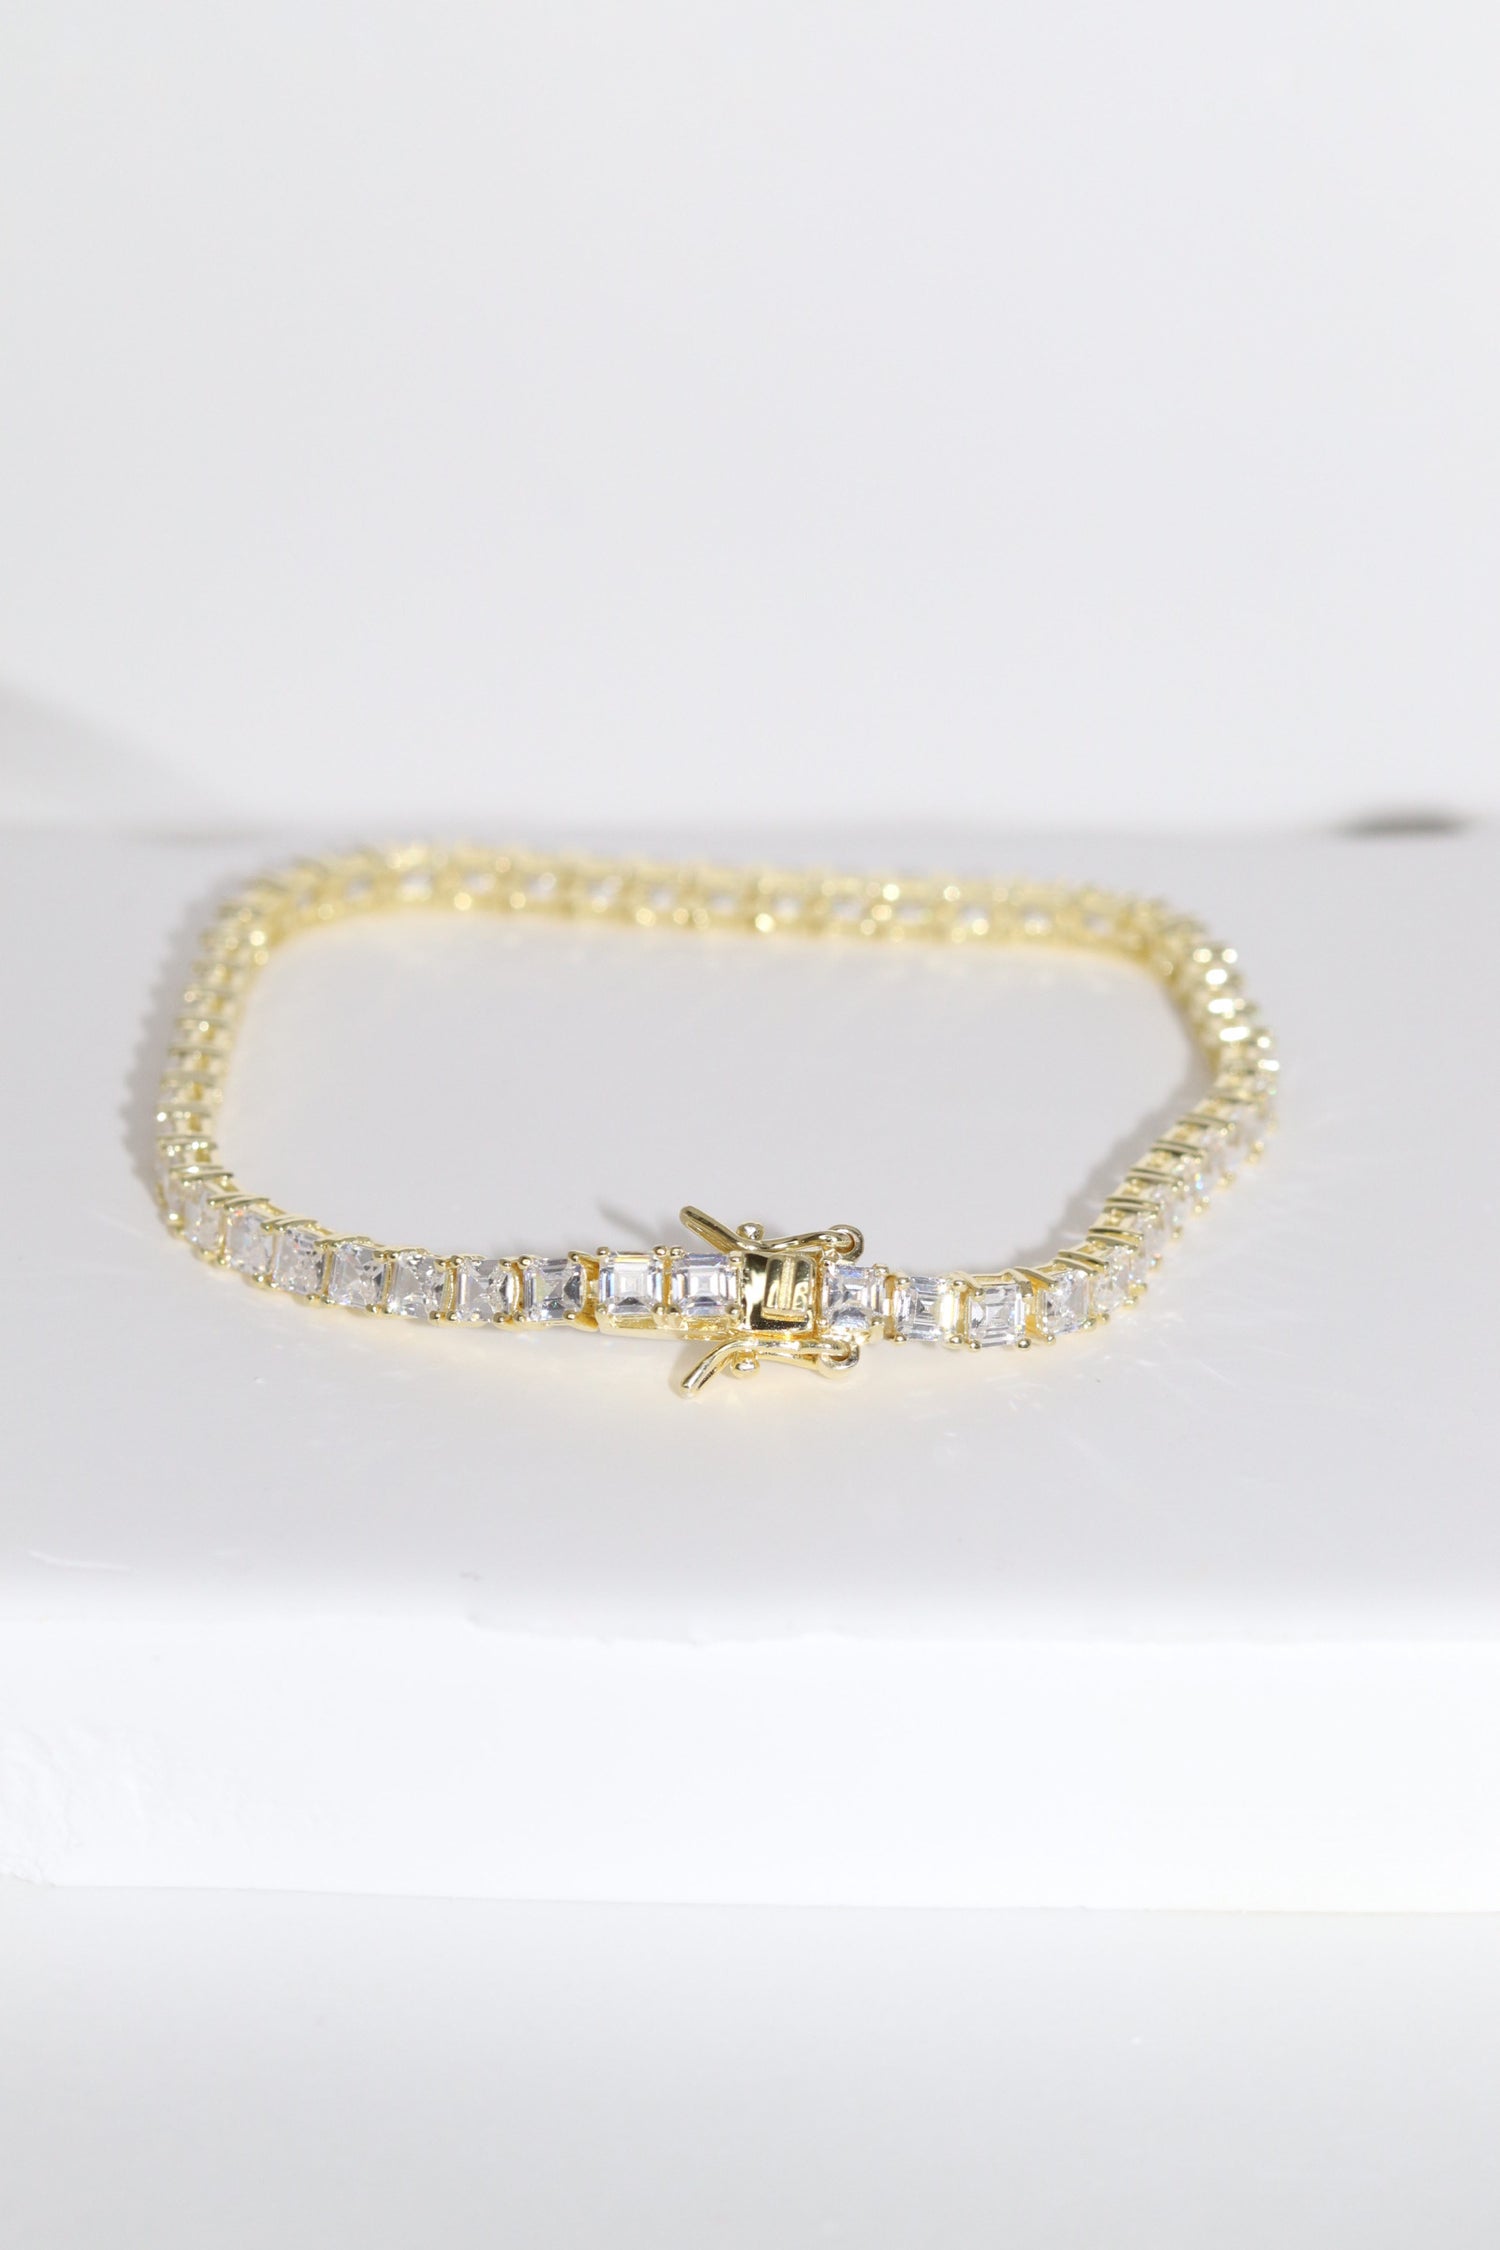 Tenni gold bracelet